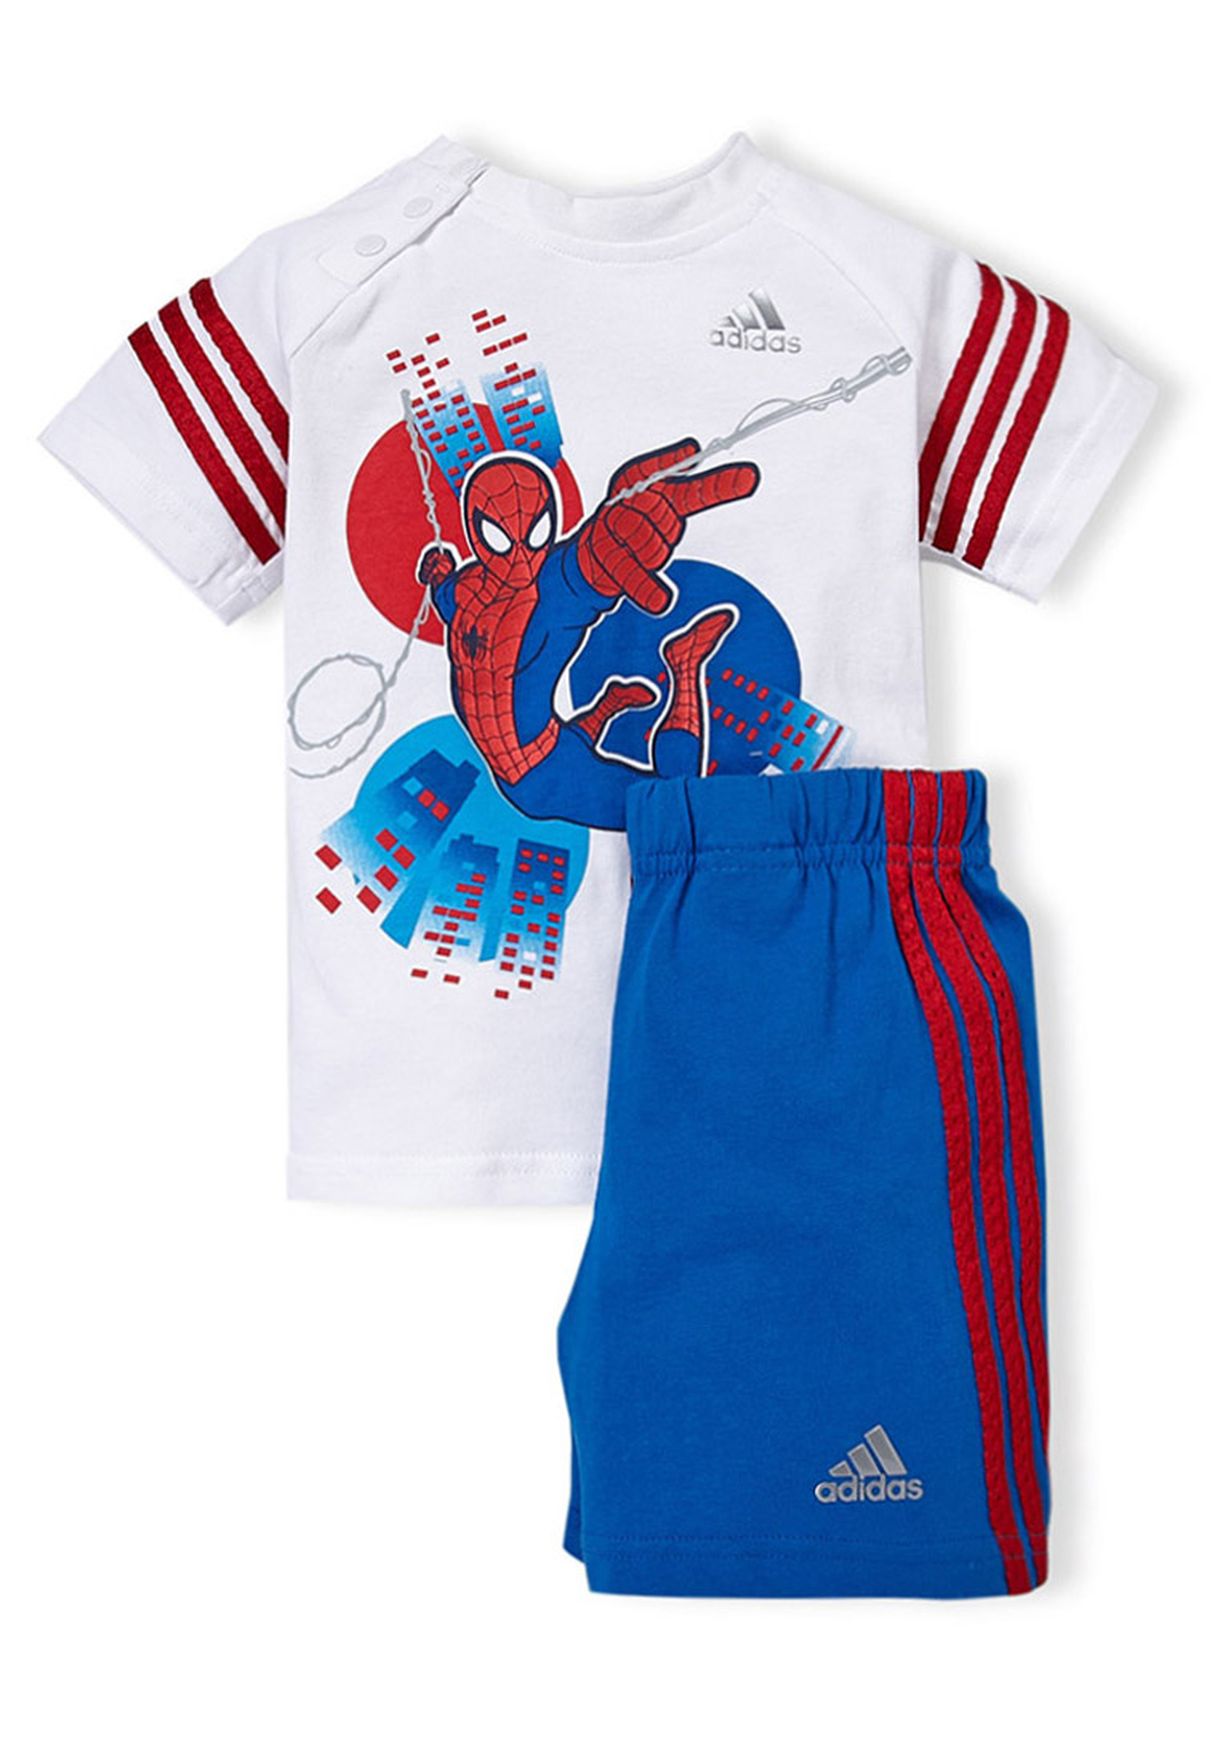 spiderman adidas shirt